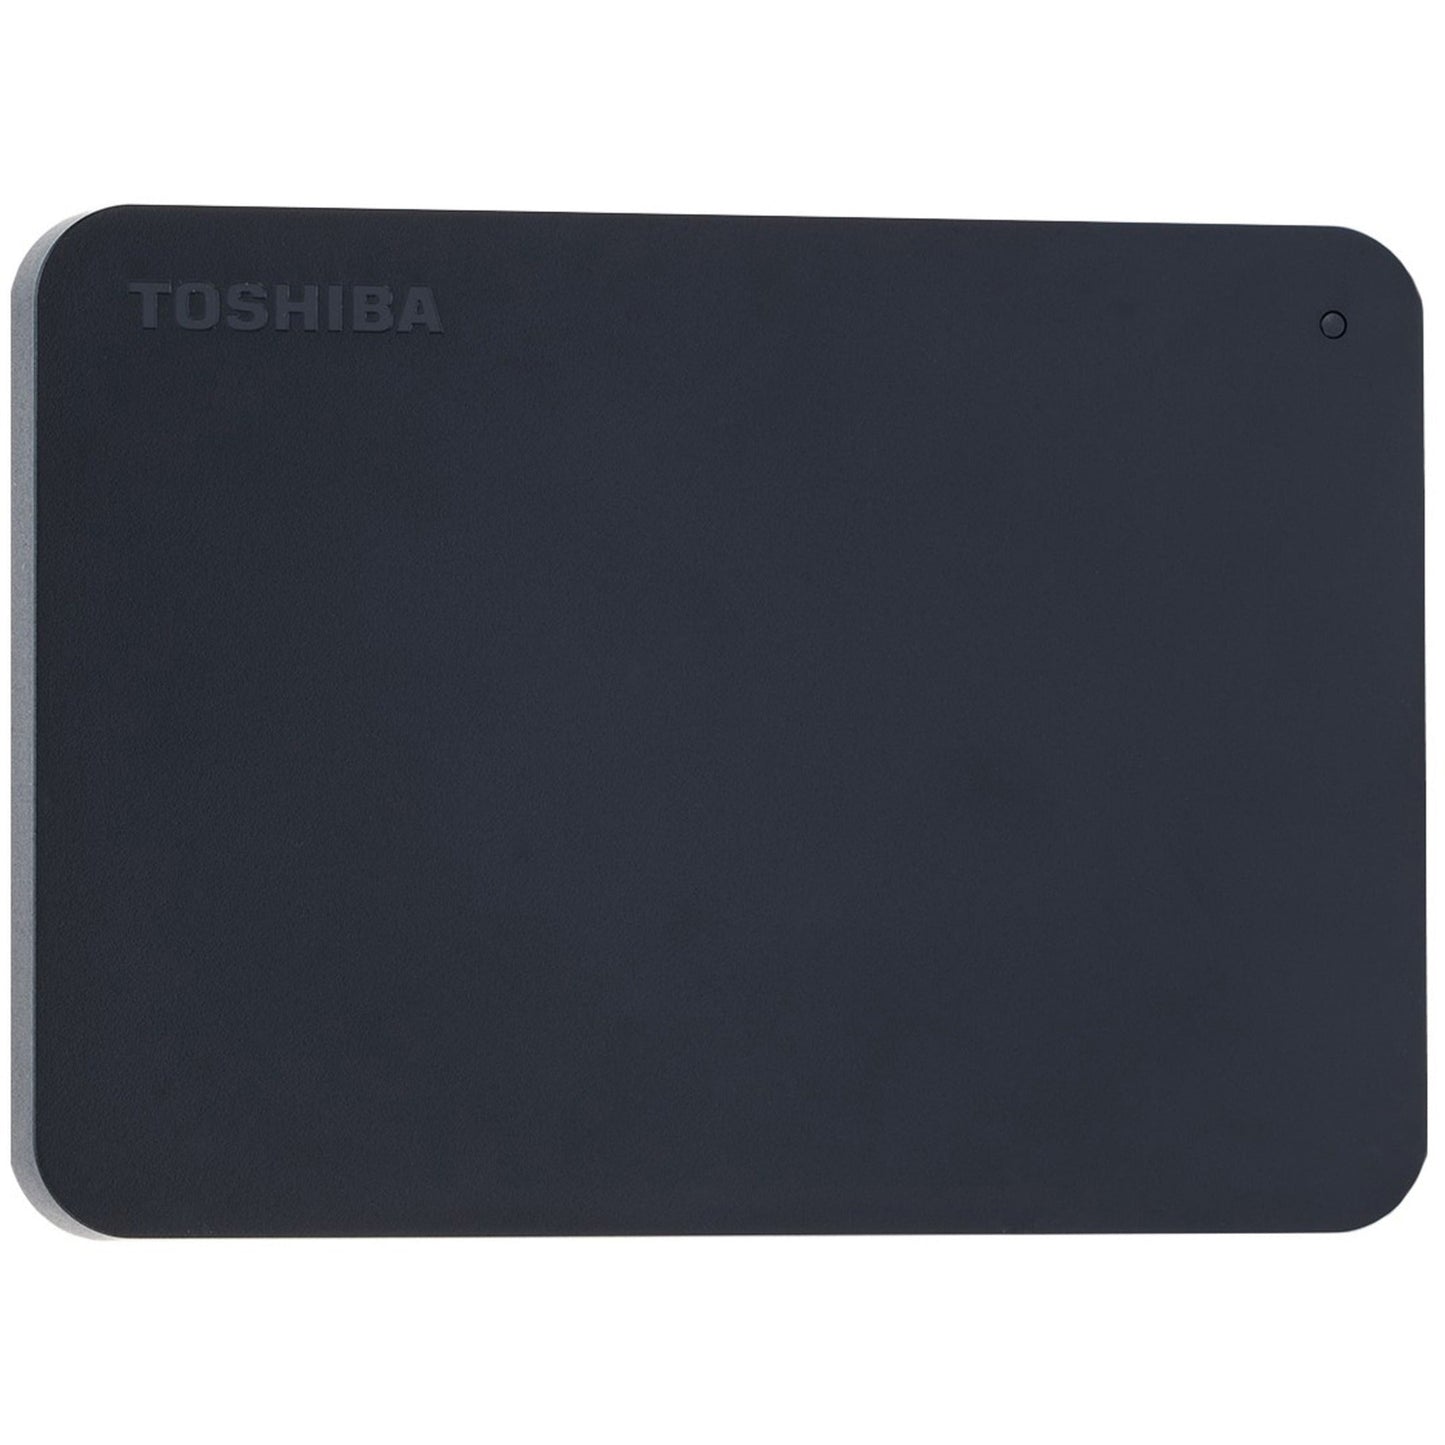 Toshiba Canvio Basics 1 TB Hard Drive - External - Black